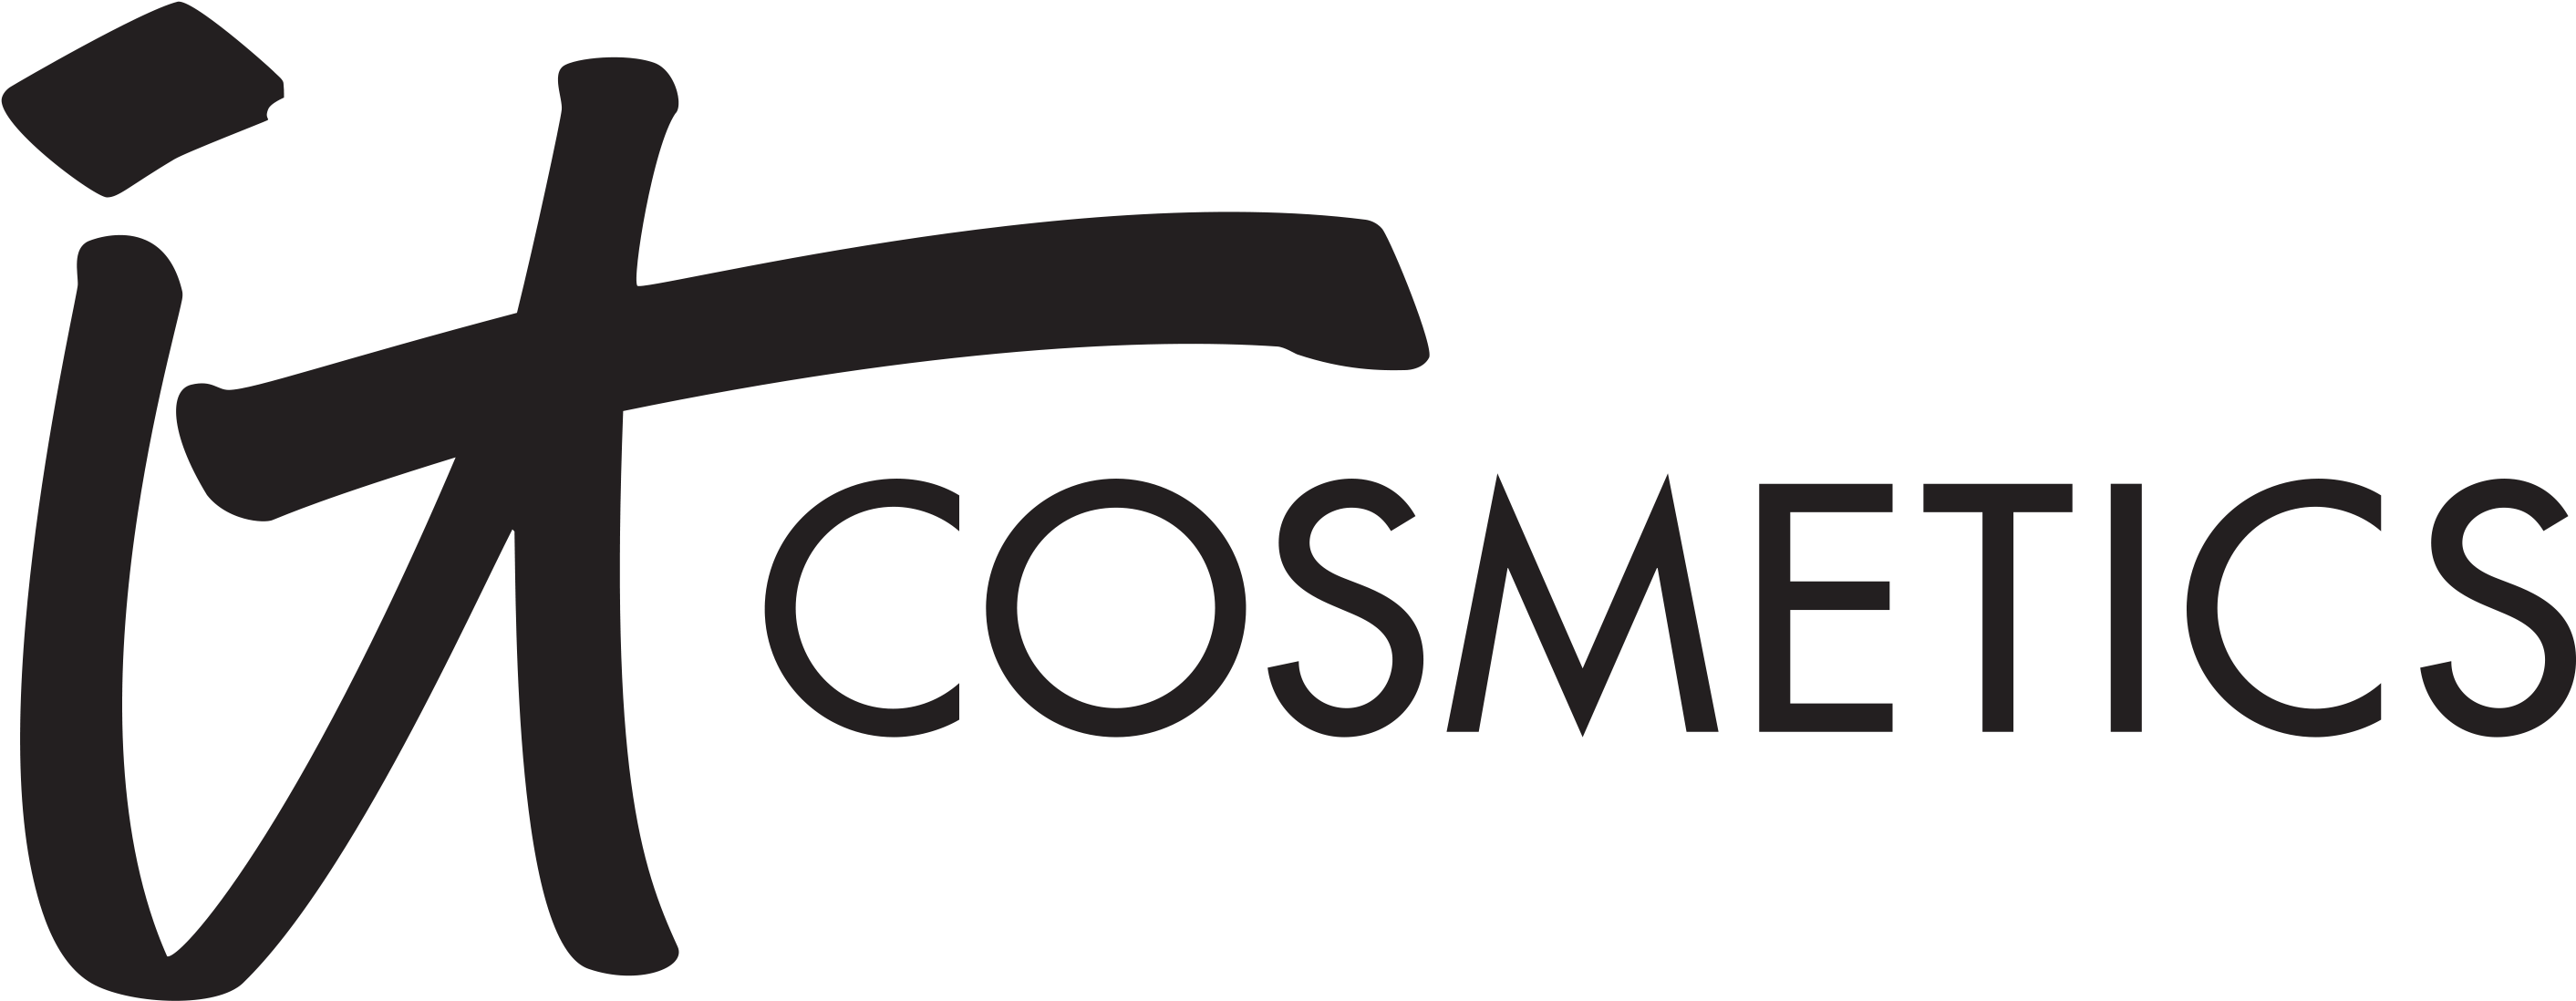 It Cosmetics - Cosmetics Logo Transparent Background (2837x1108), Png Download